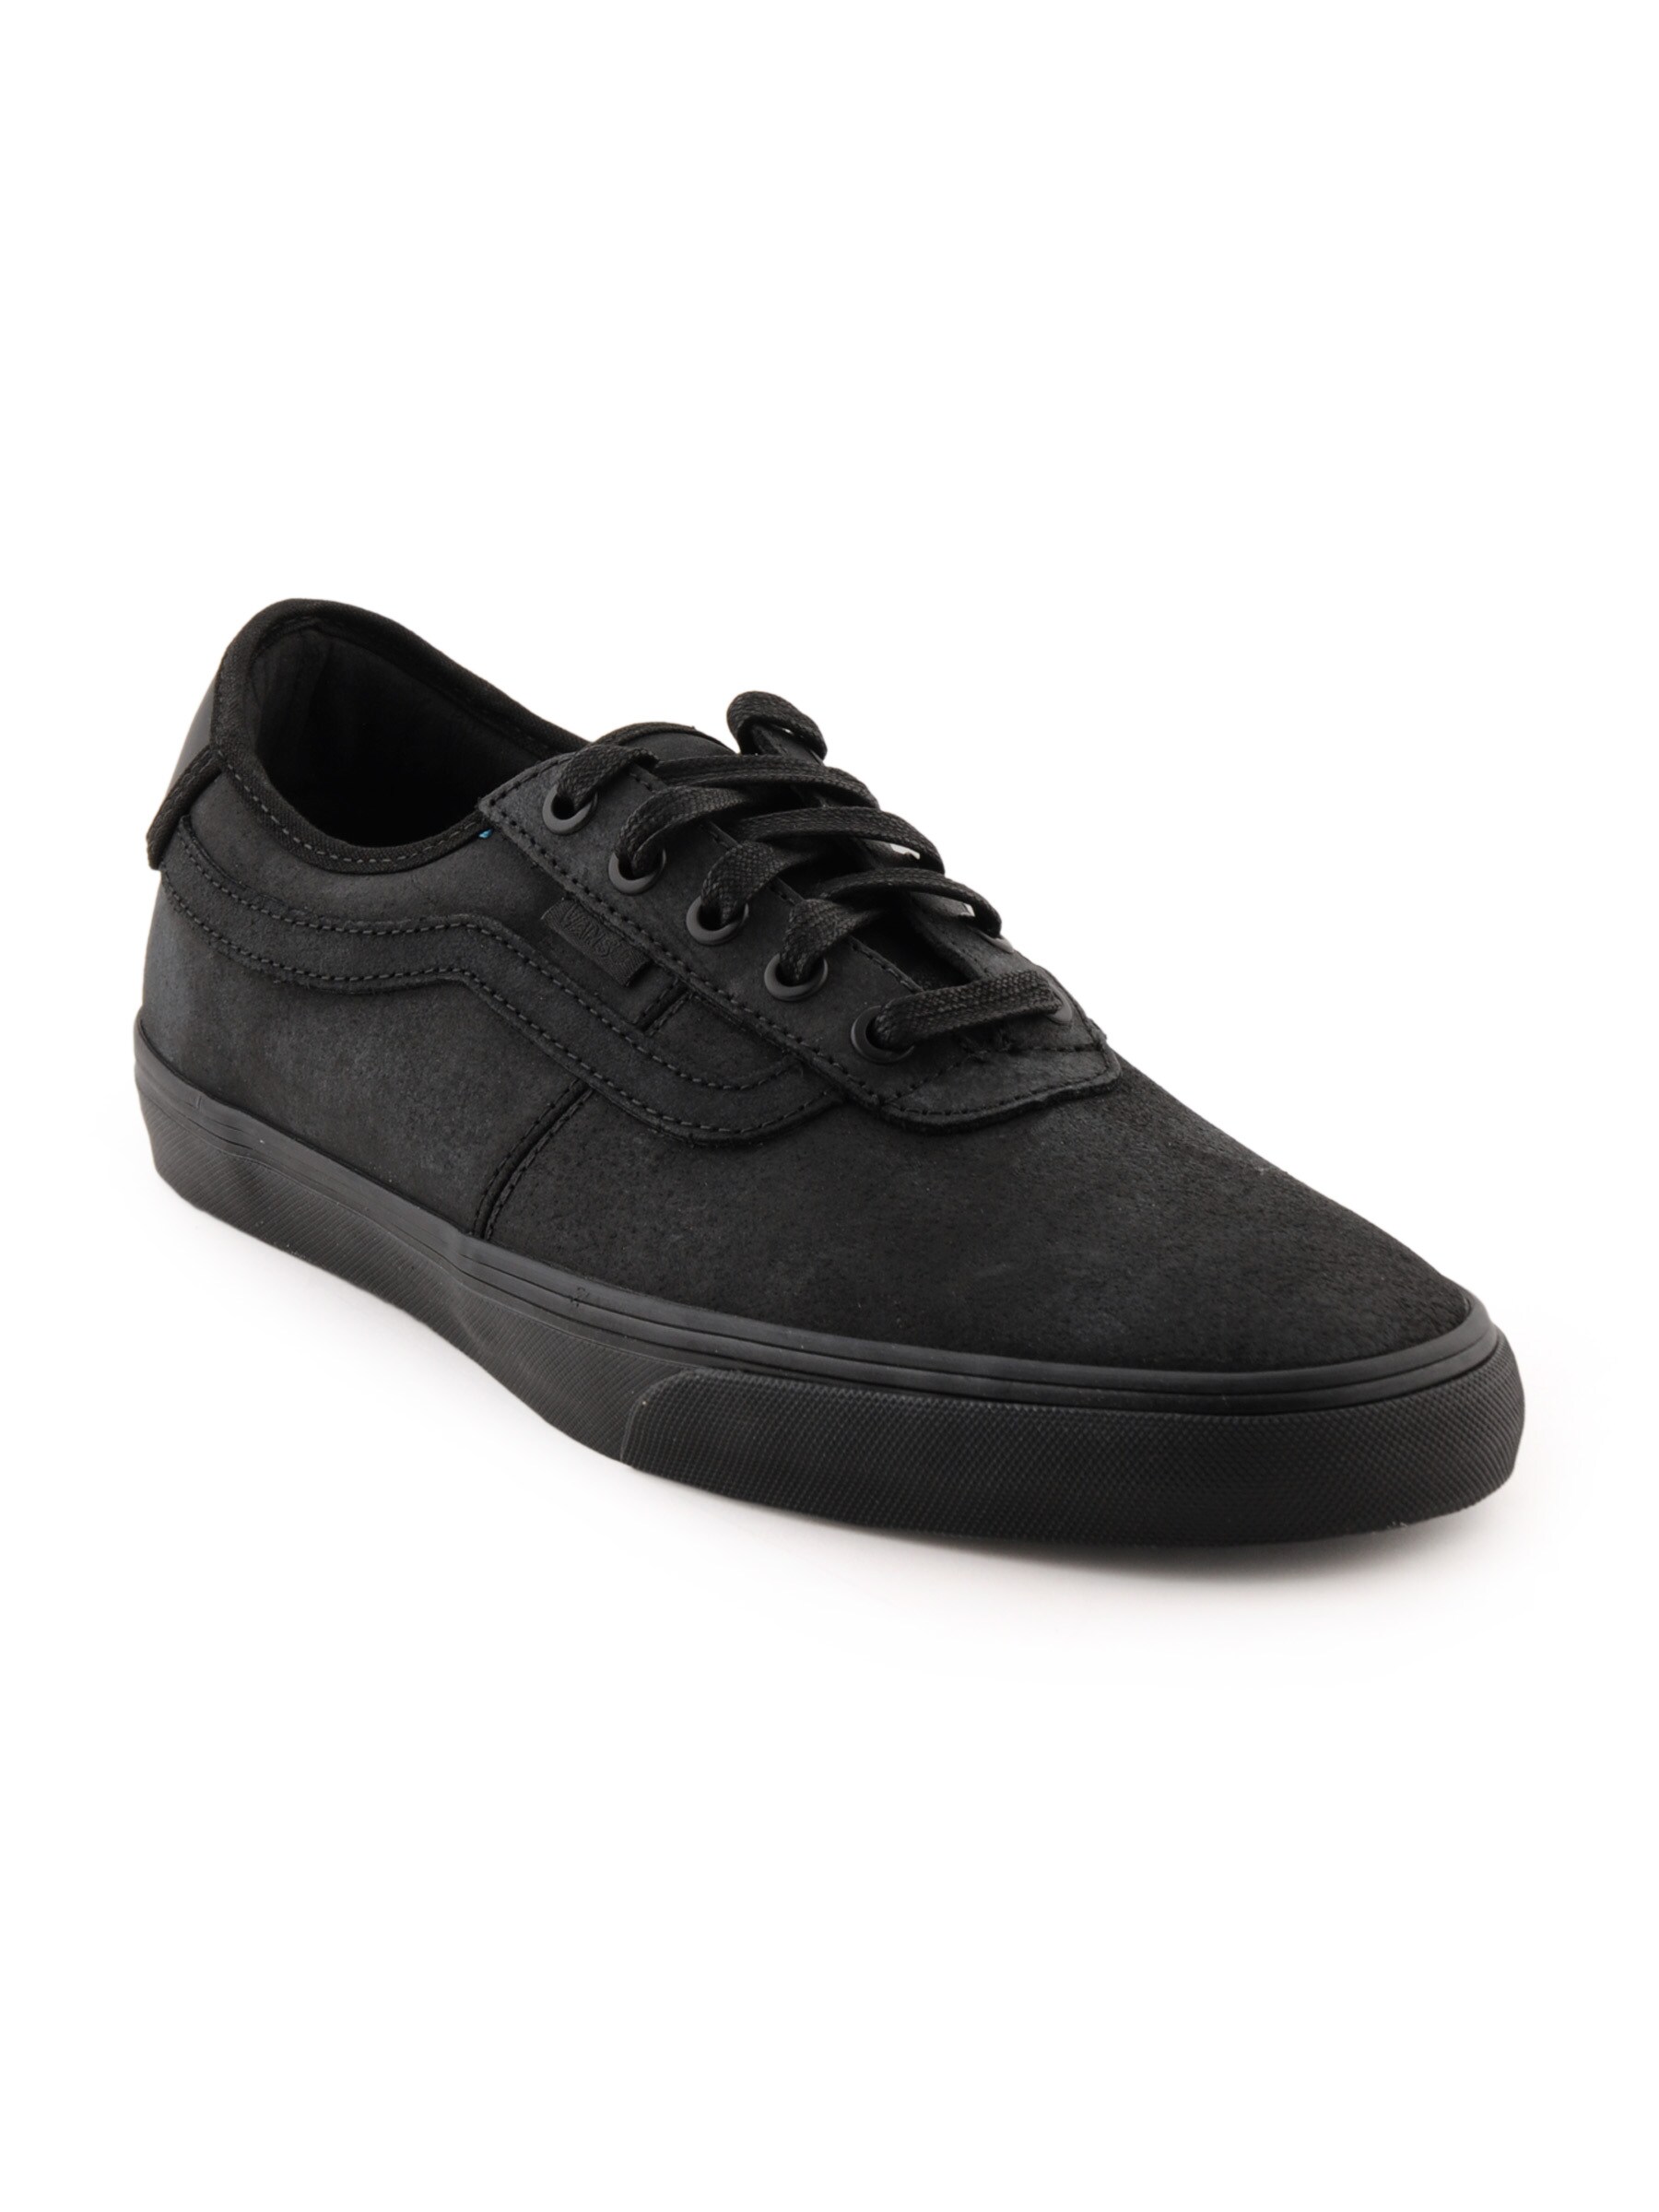 Vans Men Rowley SPV Black Casual Shoes